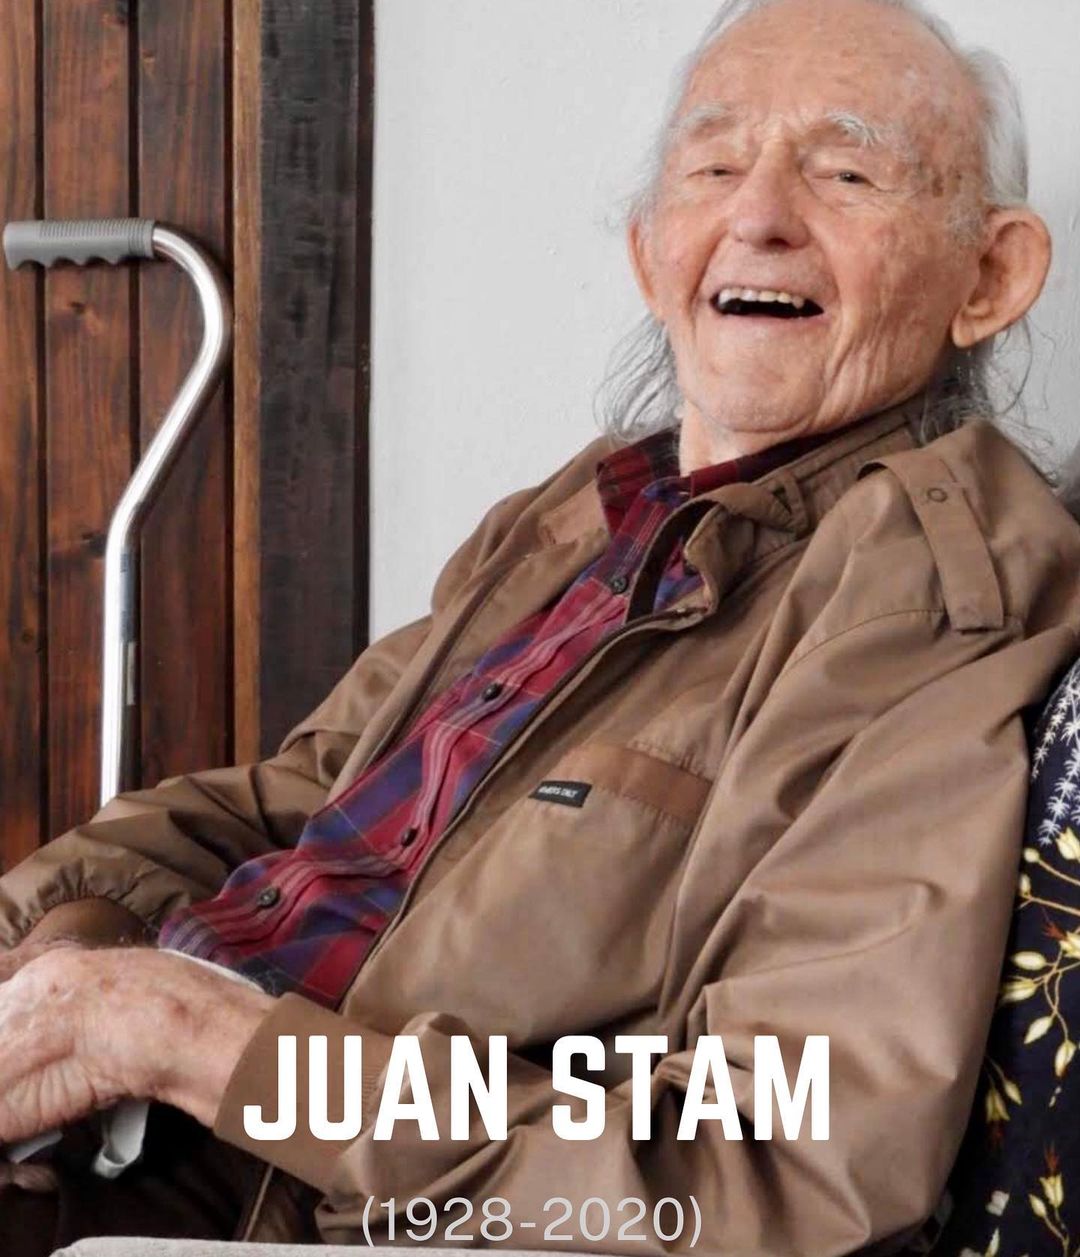 Juan Stam